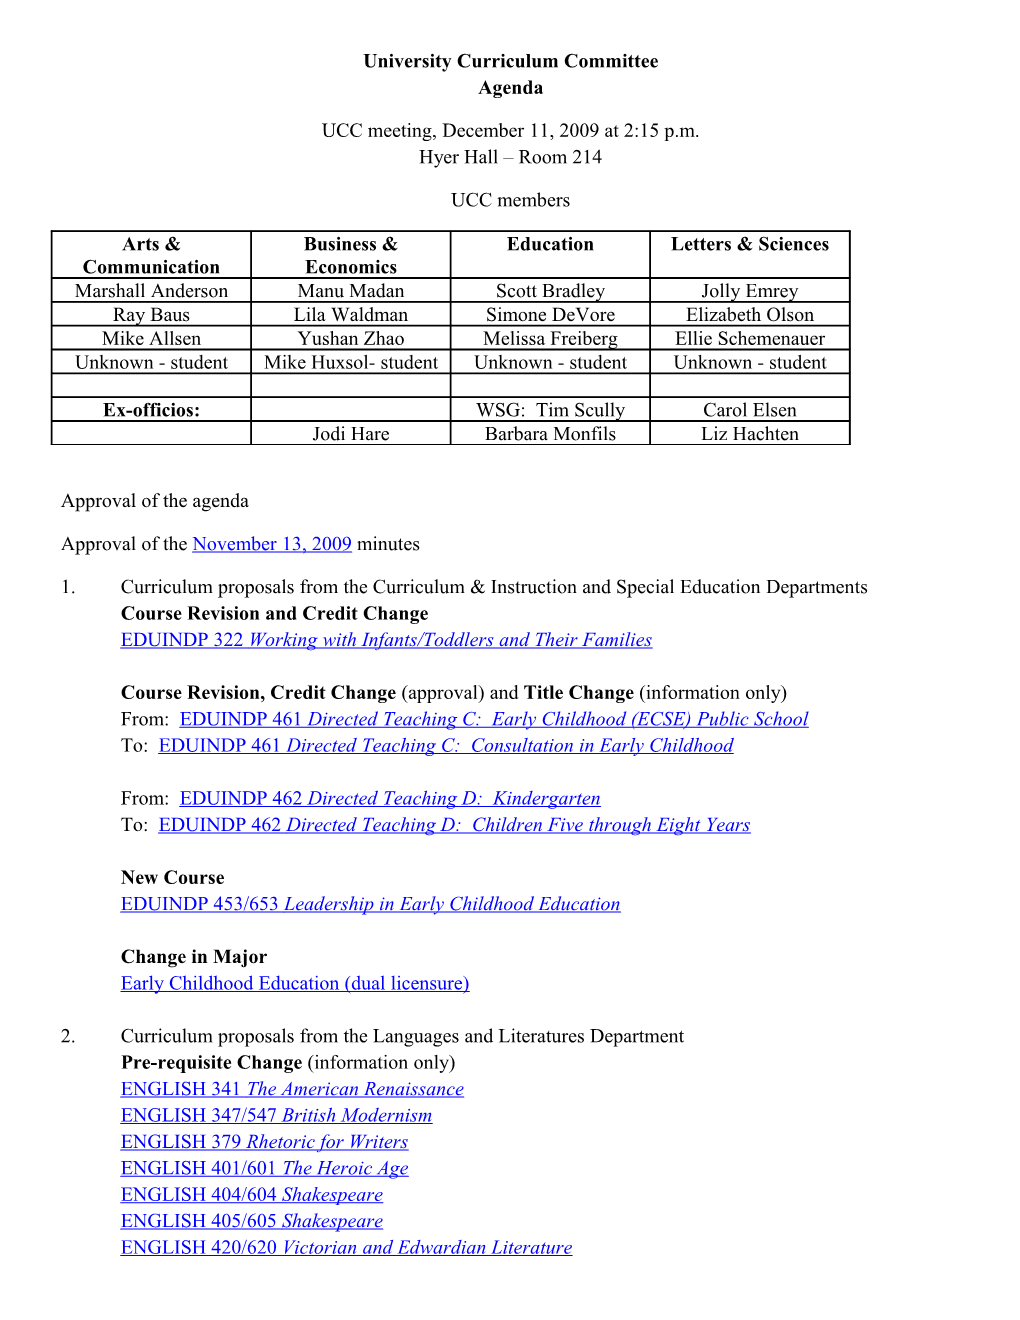 University Curriculum Committee Agenda